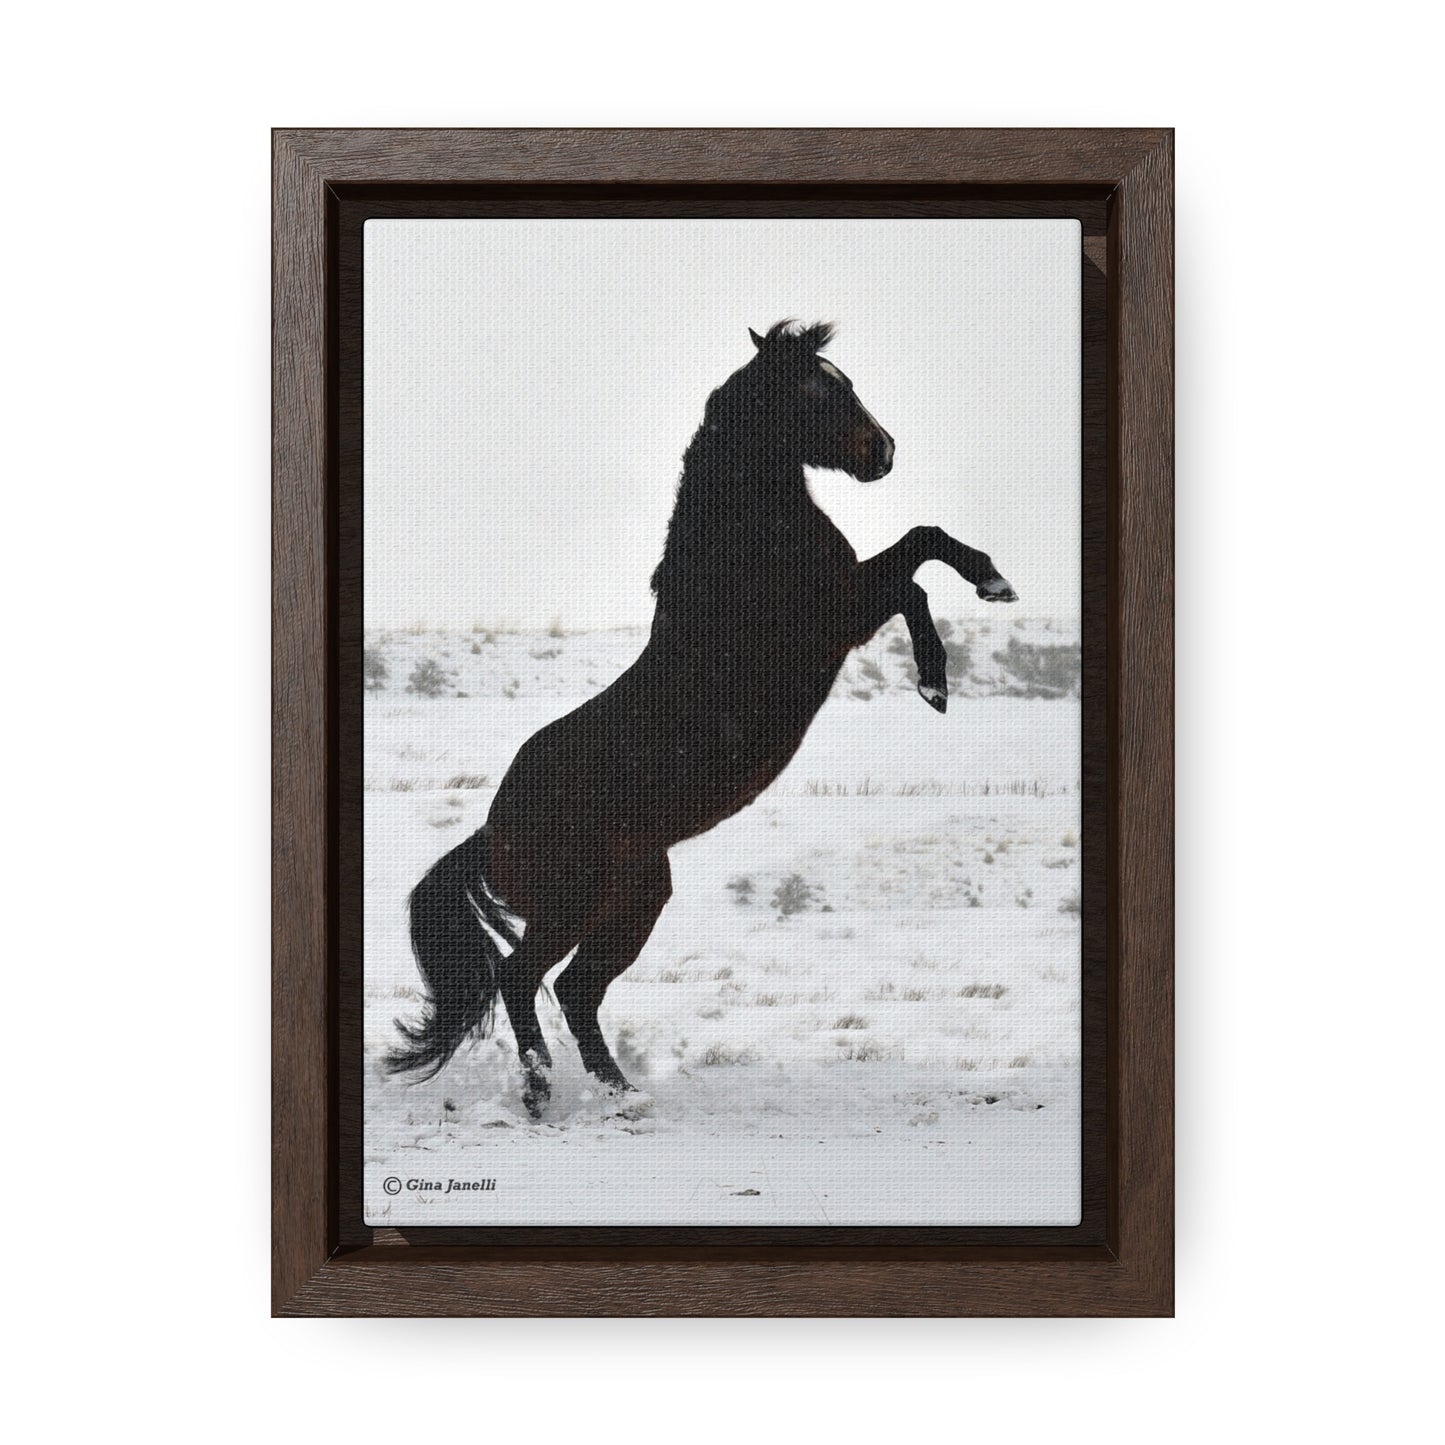 Snow Storm - Quarter Horse    Gallery Canvas Wraps, Vertical Frame